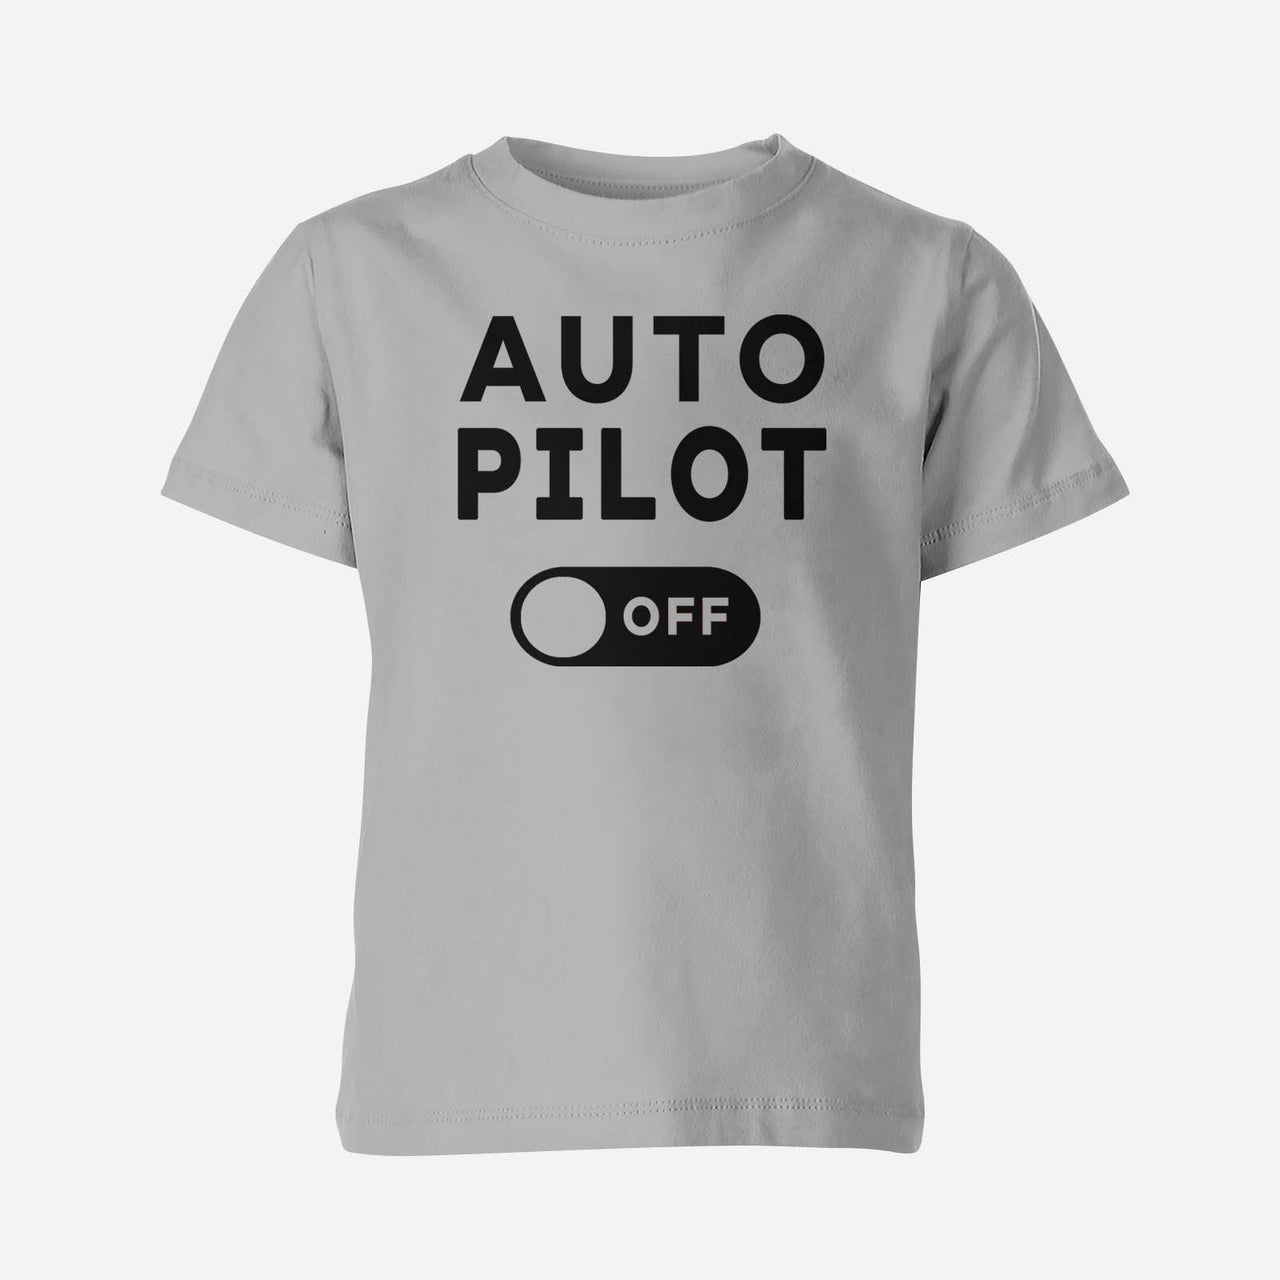 Auto Pilot Off Designed Children T-Shirts